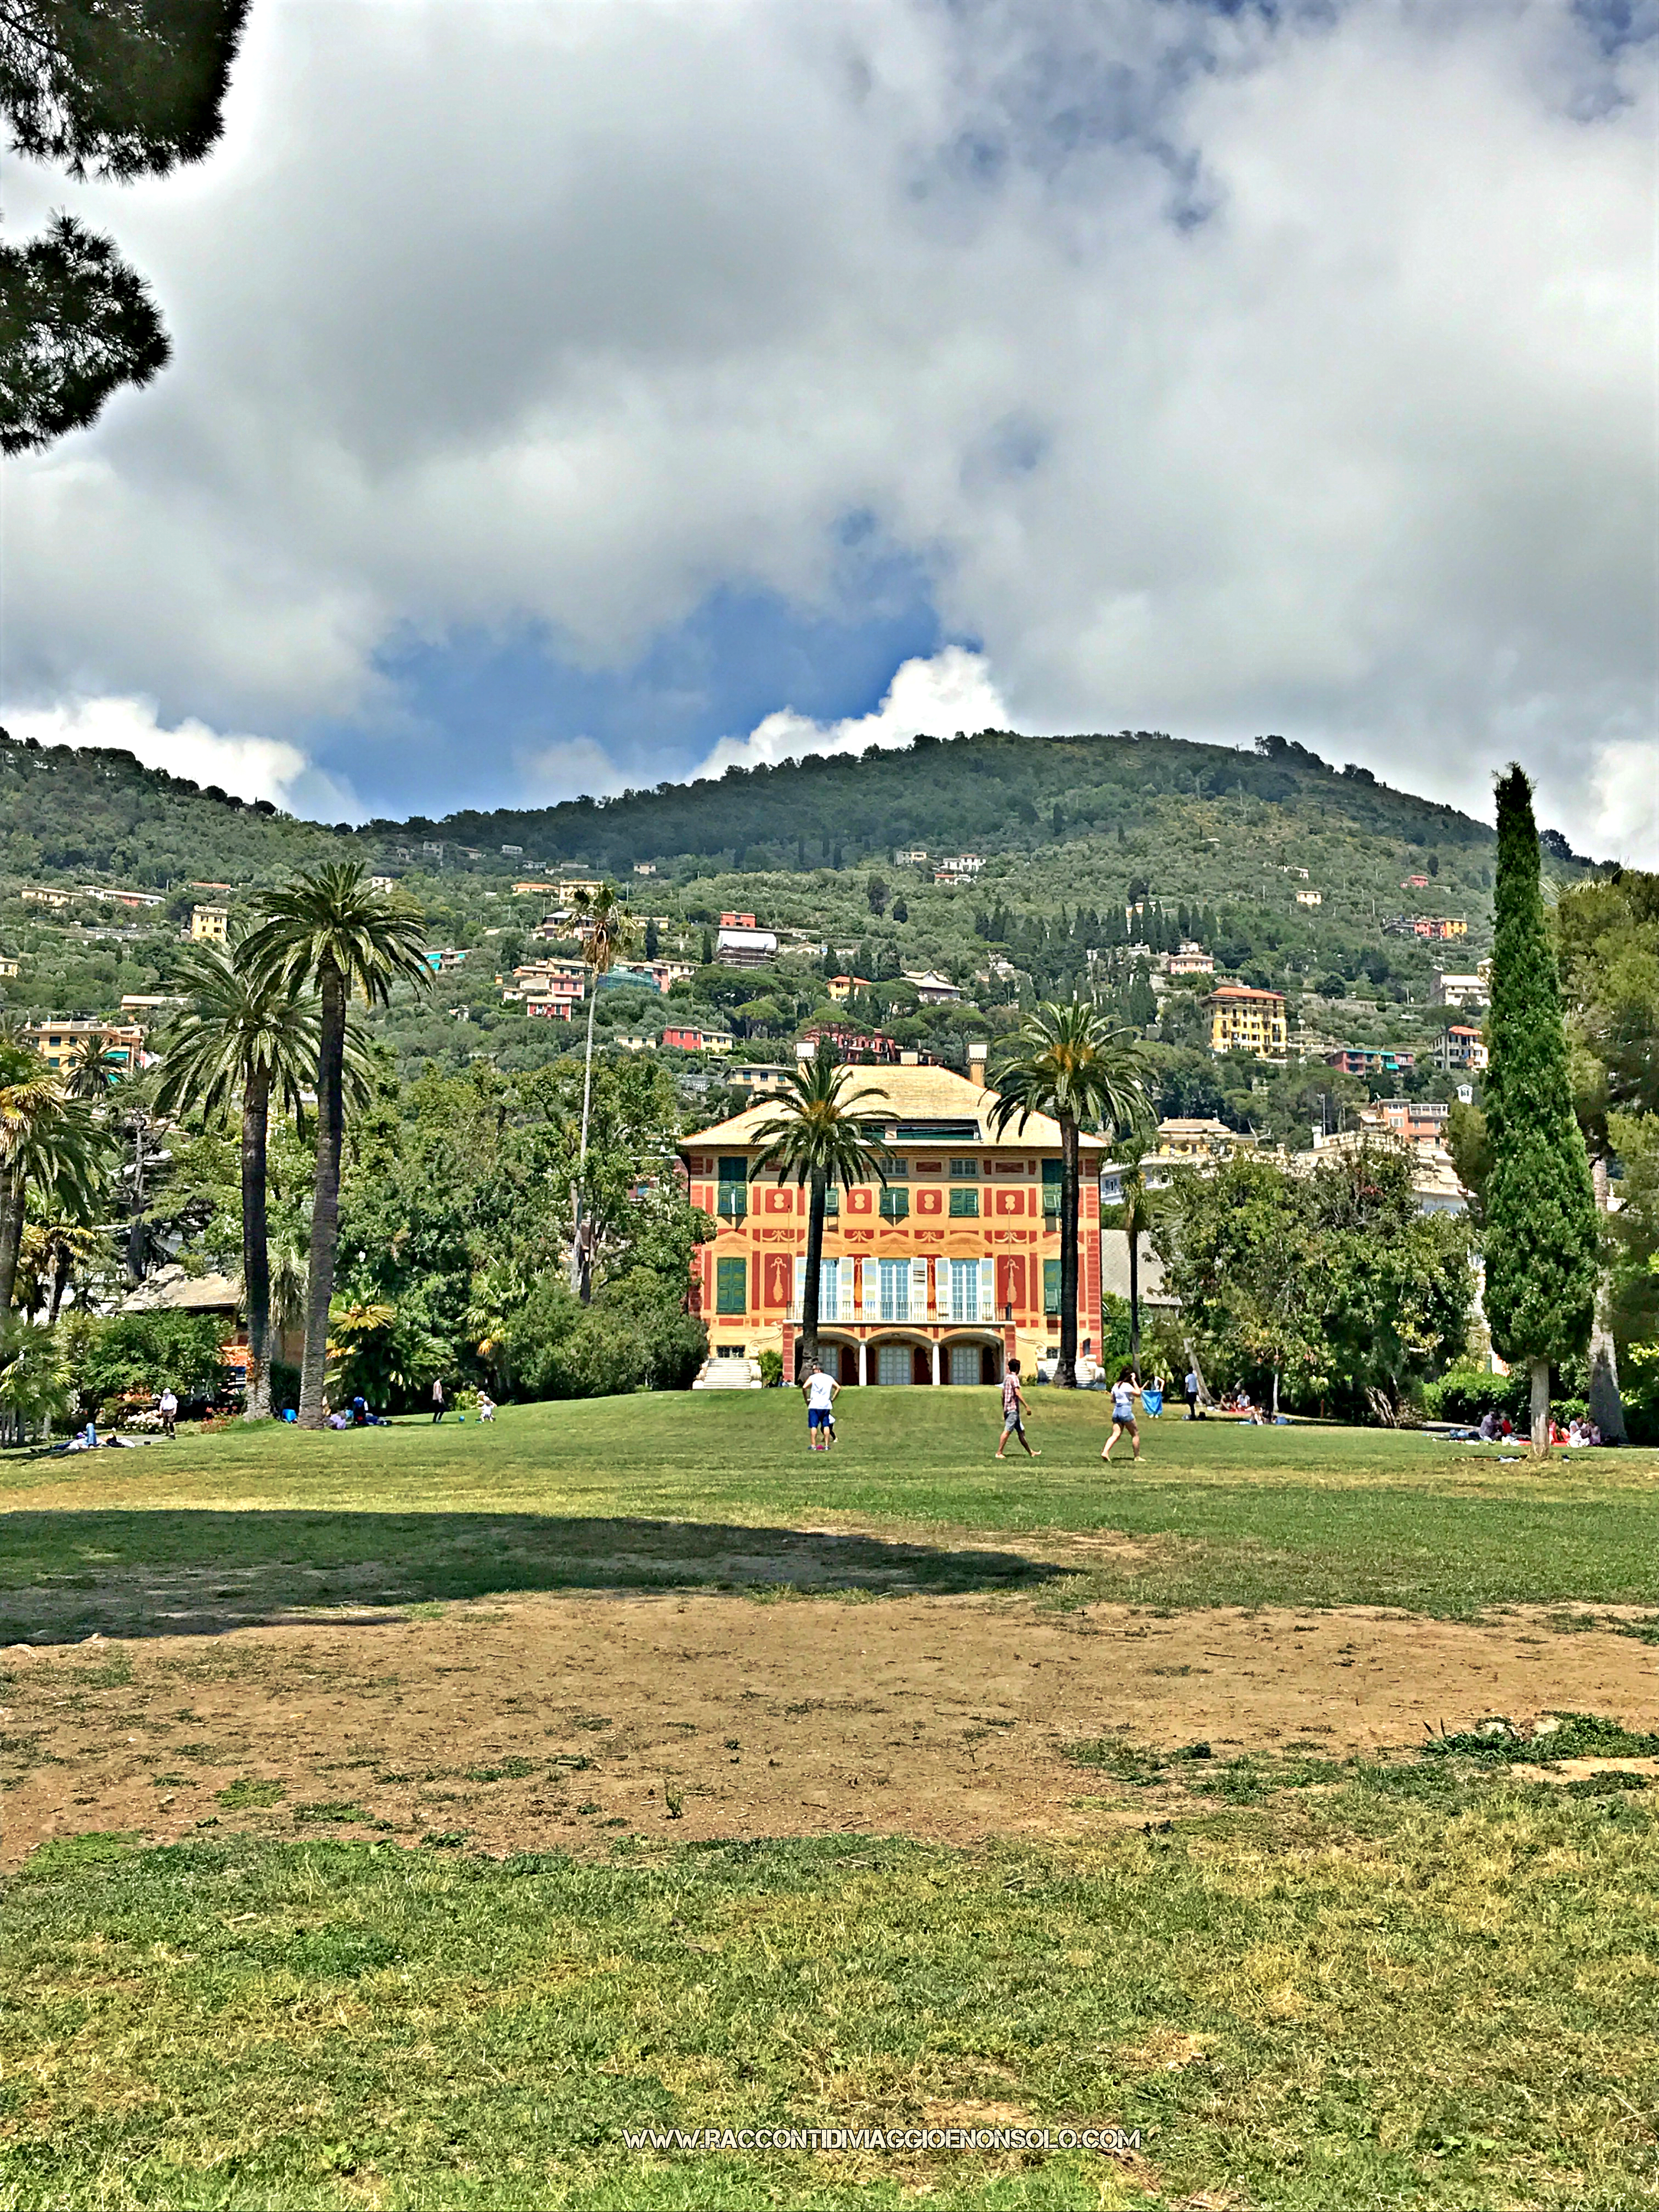 Villa Grimaldi Nervi